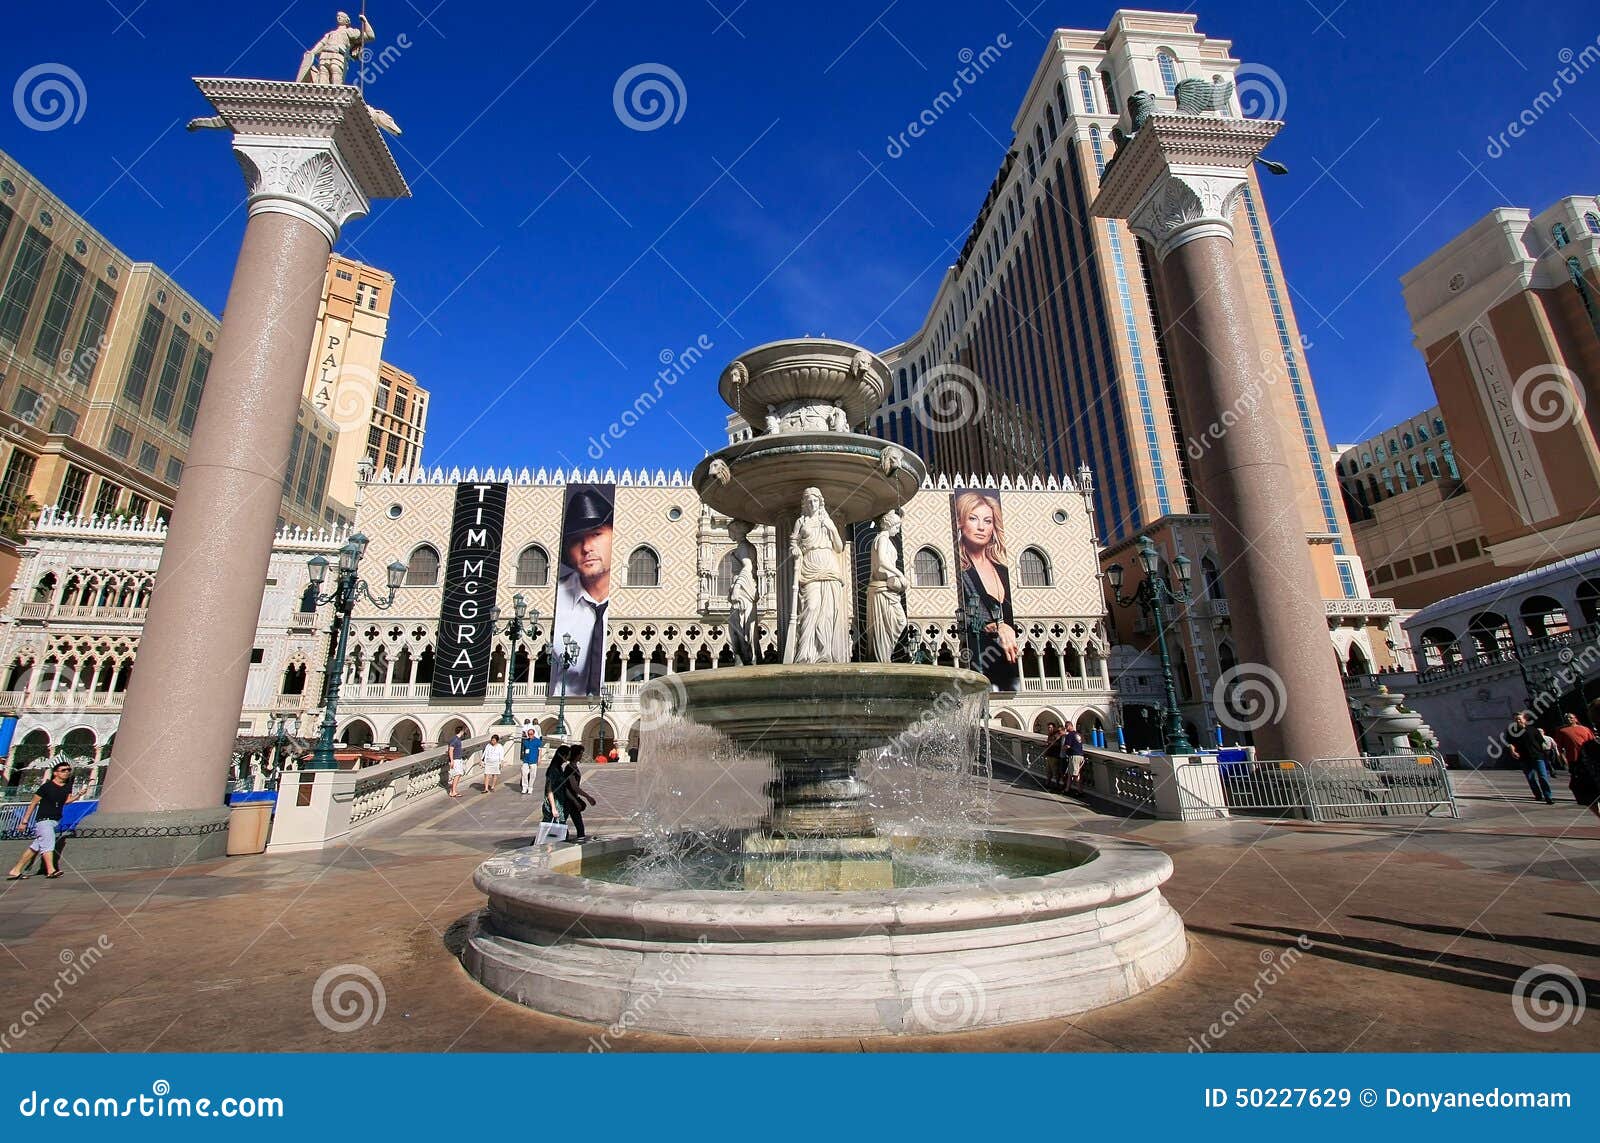 Venetian Resort Hotel & Casino, Las Vegas